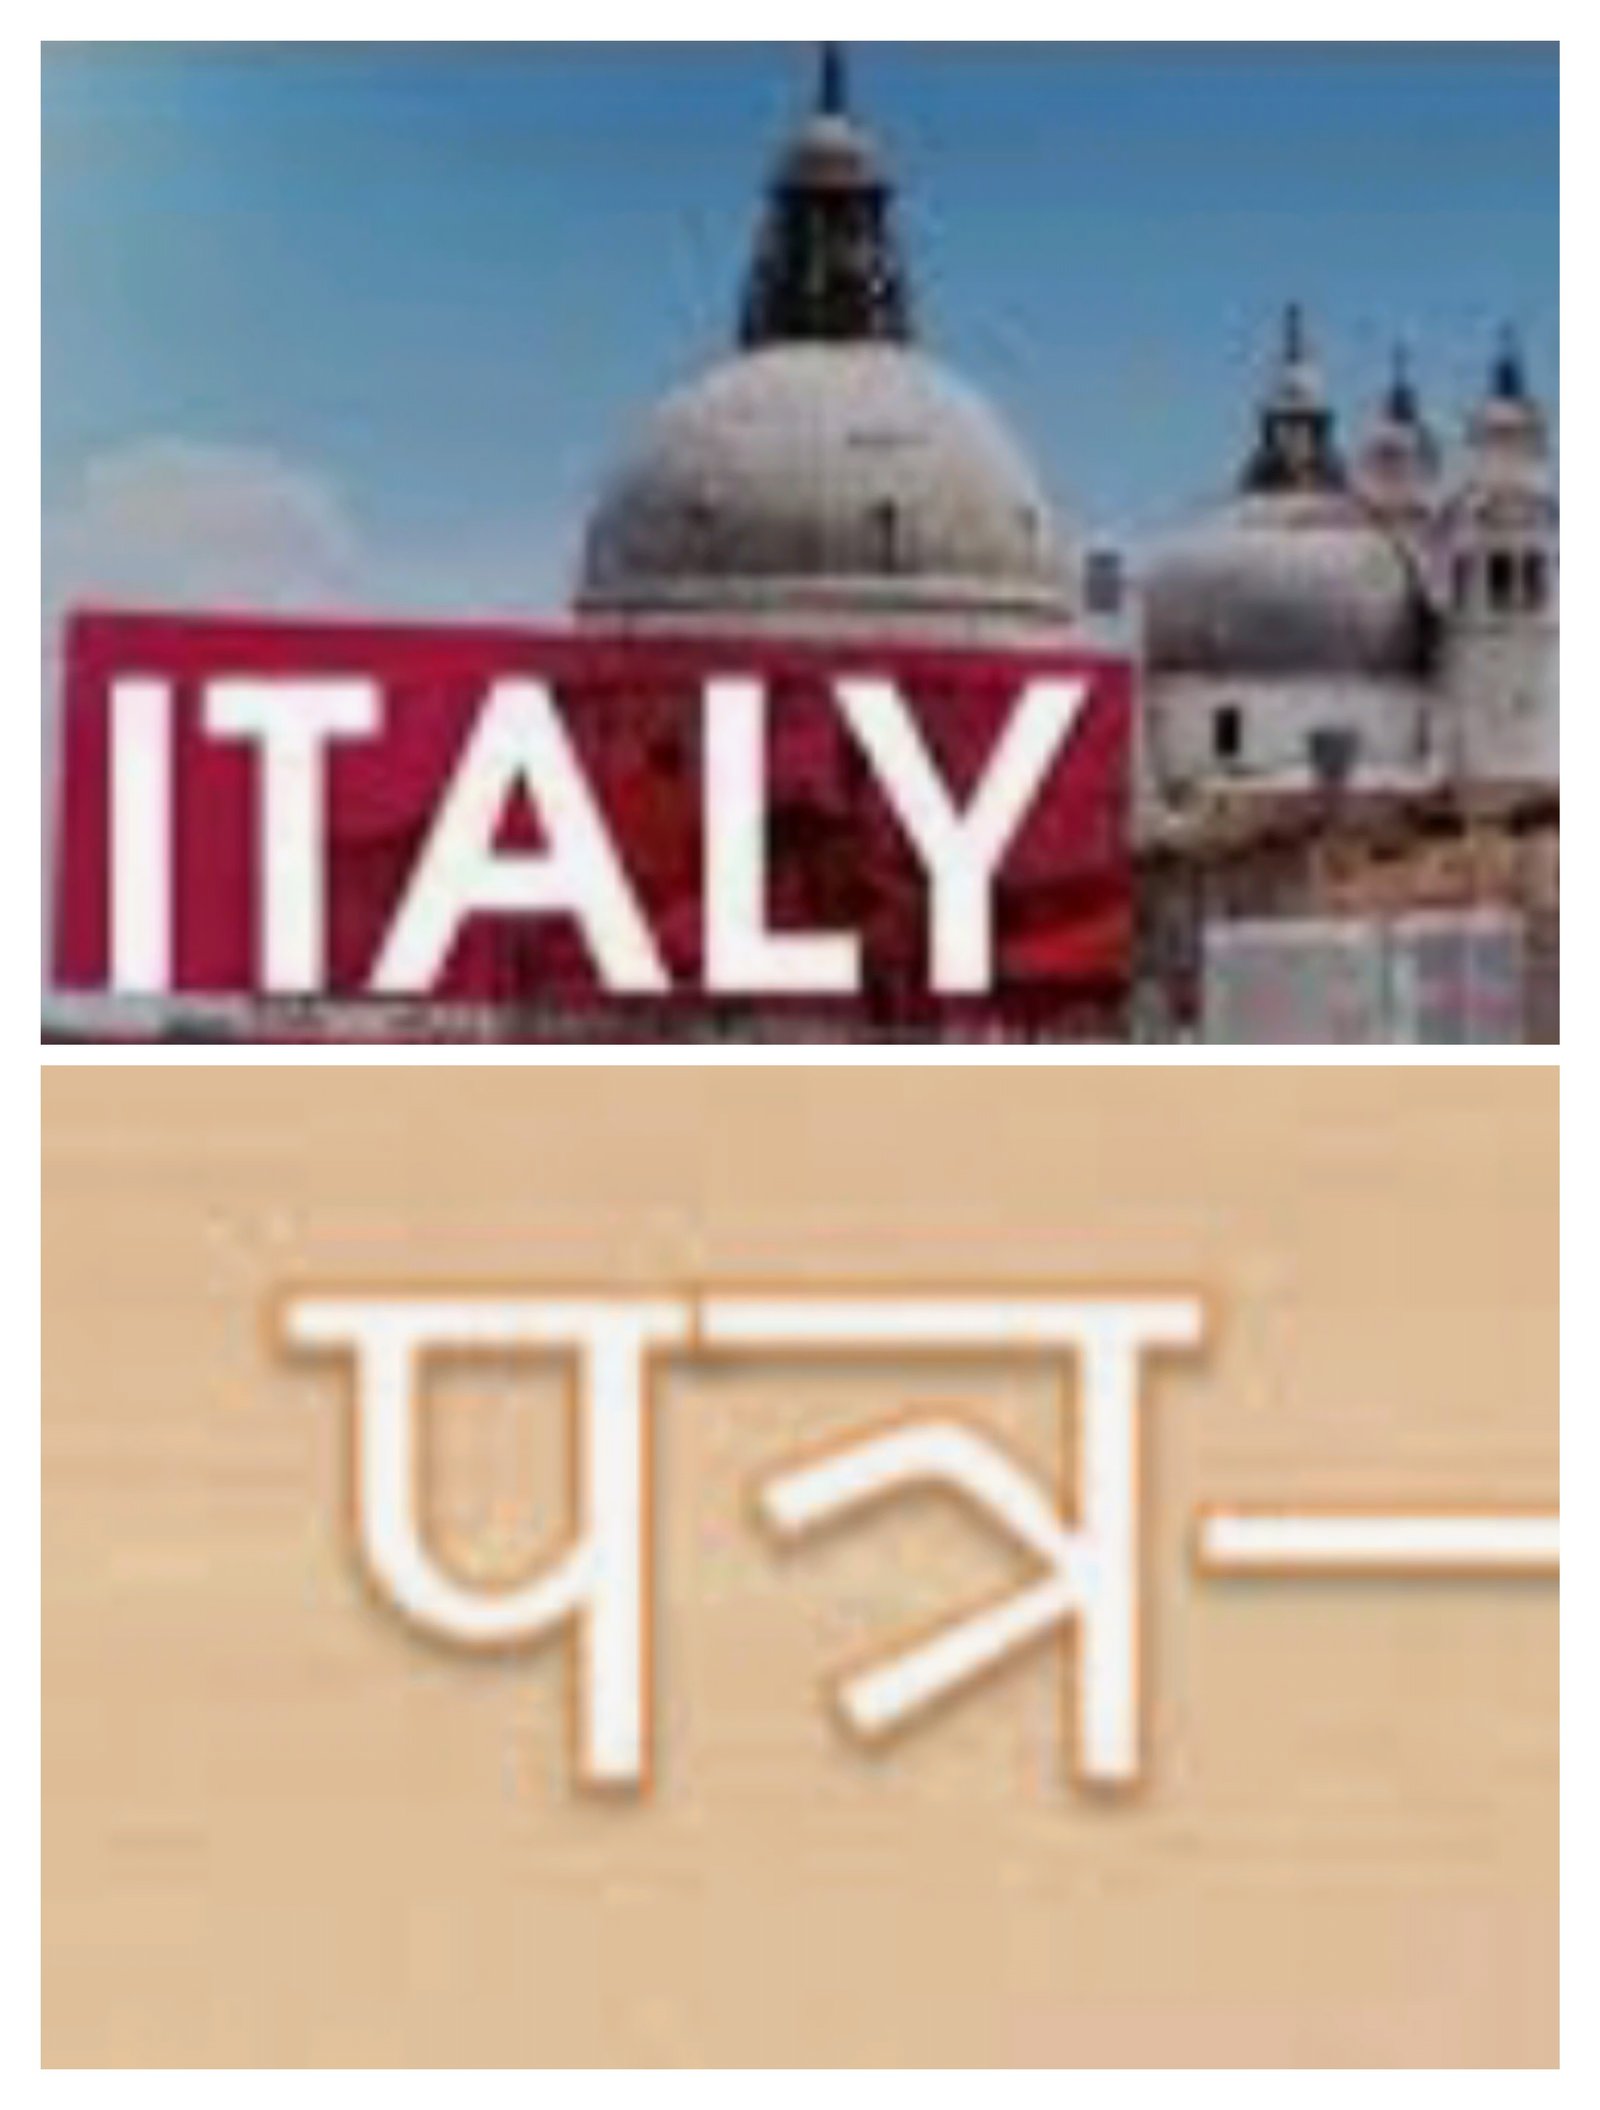 Adarsh Maharashtra | इटलीचा जगाला संदेश